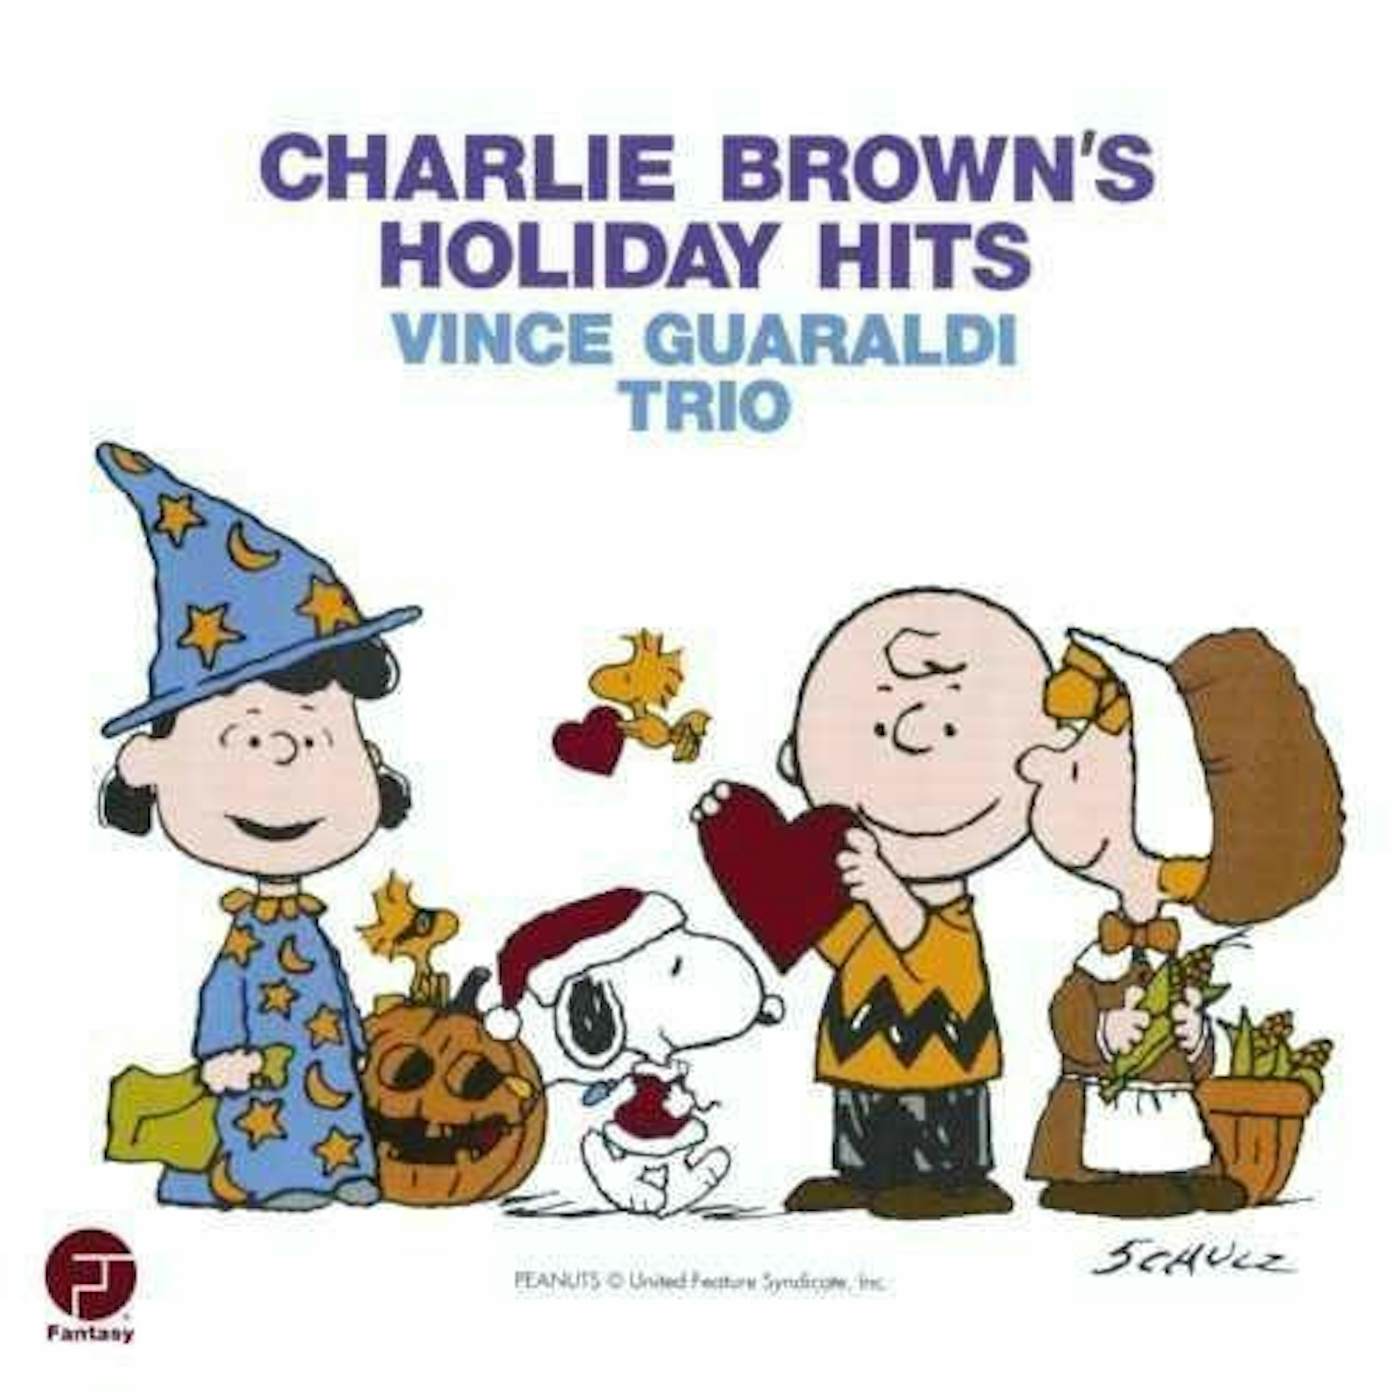 Vince Guaraldi CHARLIE BROWN'S HOLIDAY HITS Vinyl Record